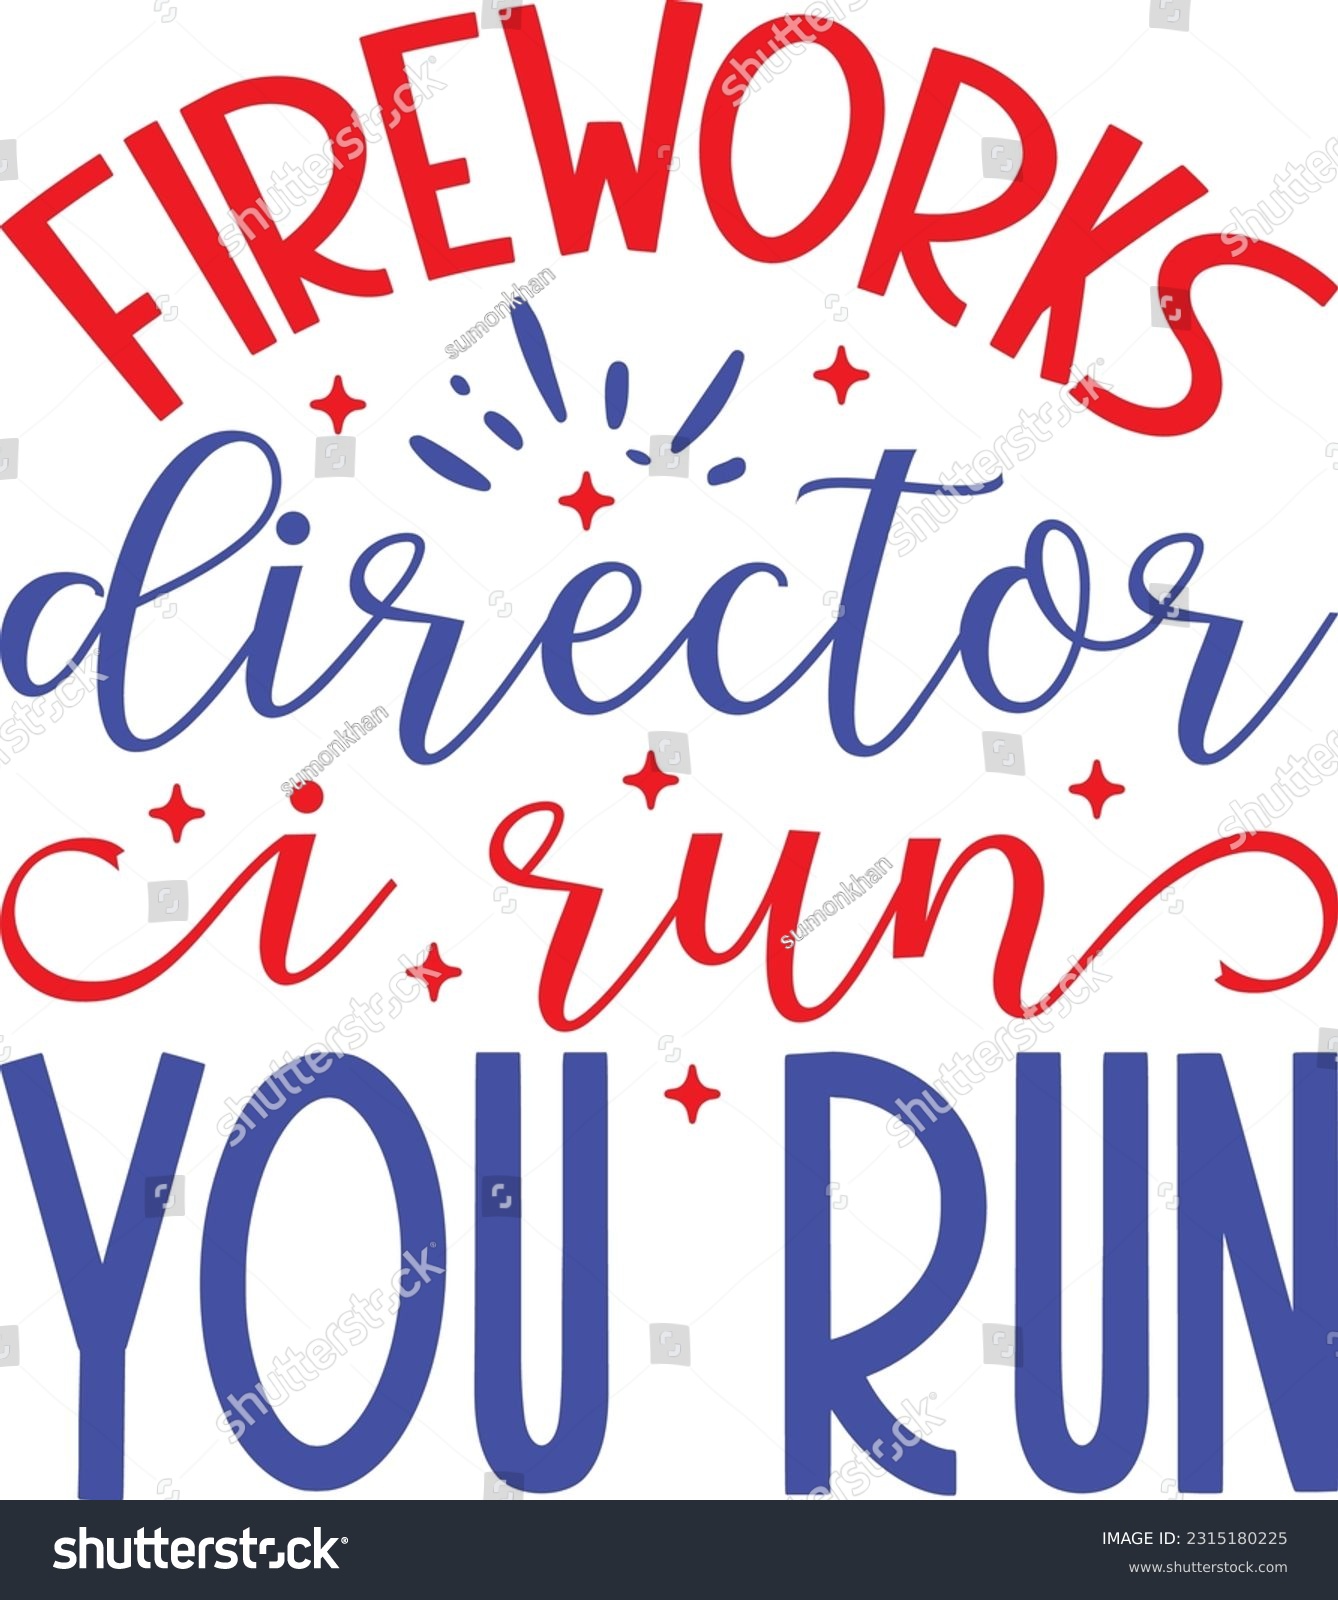 SVG of Fireworks Director I Run You Run ; Best Design Quality SVG  svg